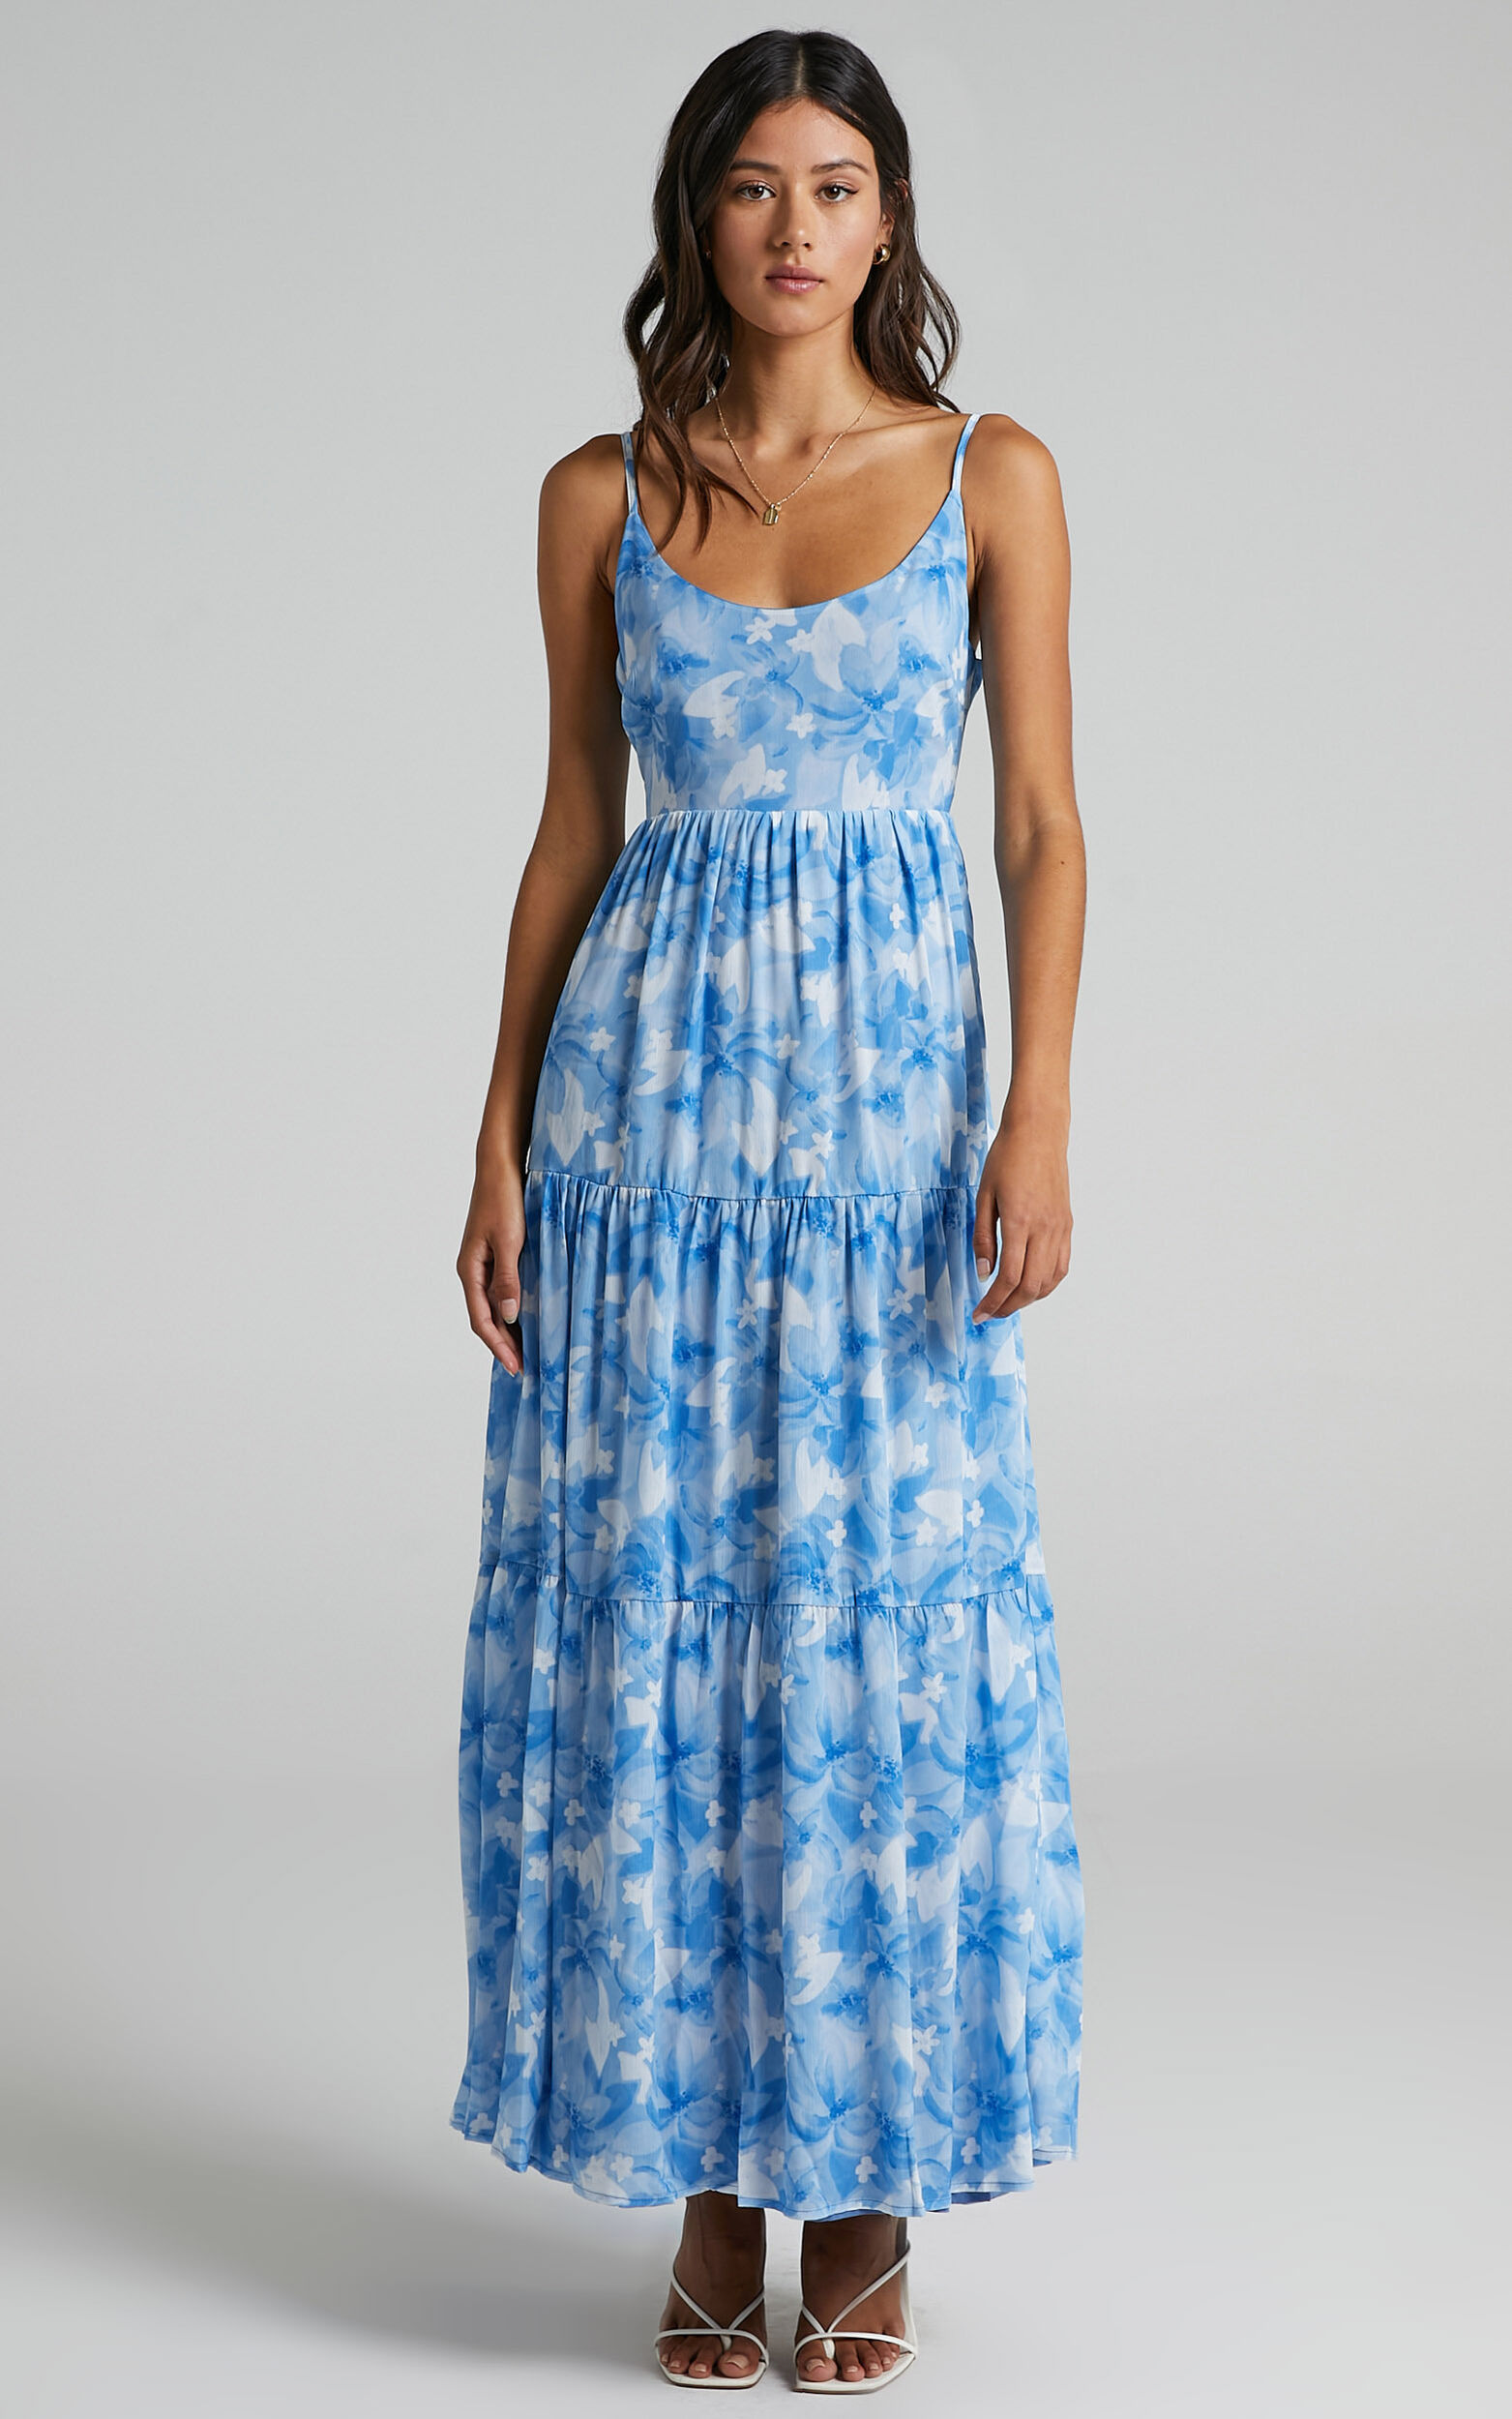 Dasia Maxi Dress in Cloudy Floral | Showpo USA